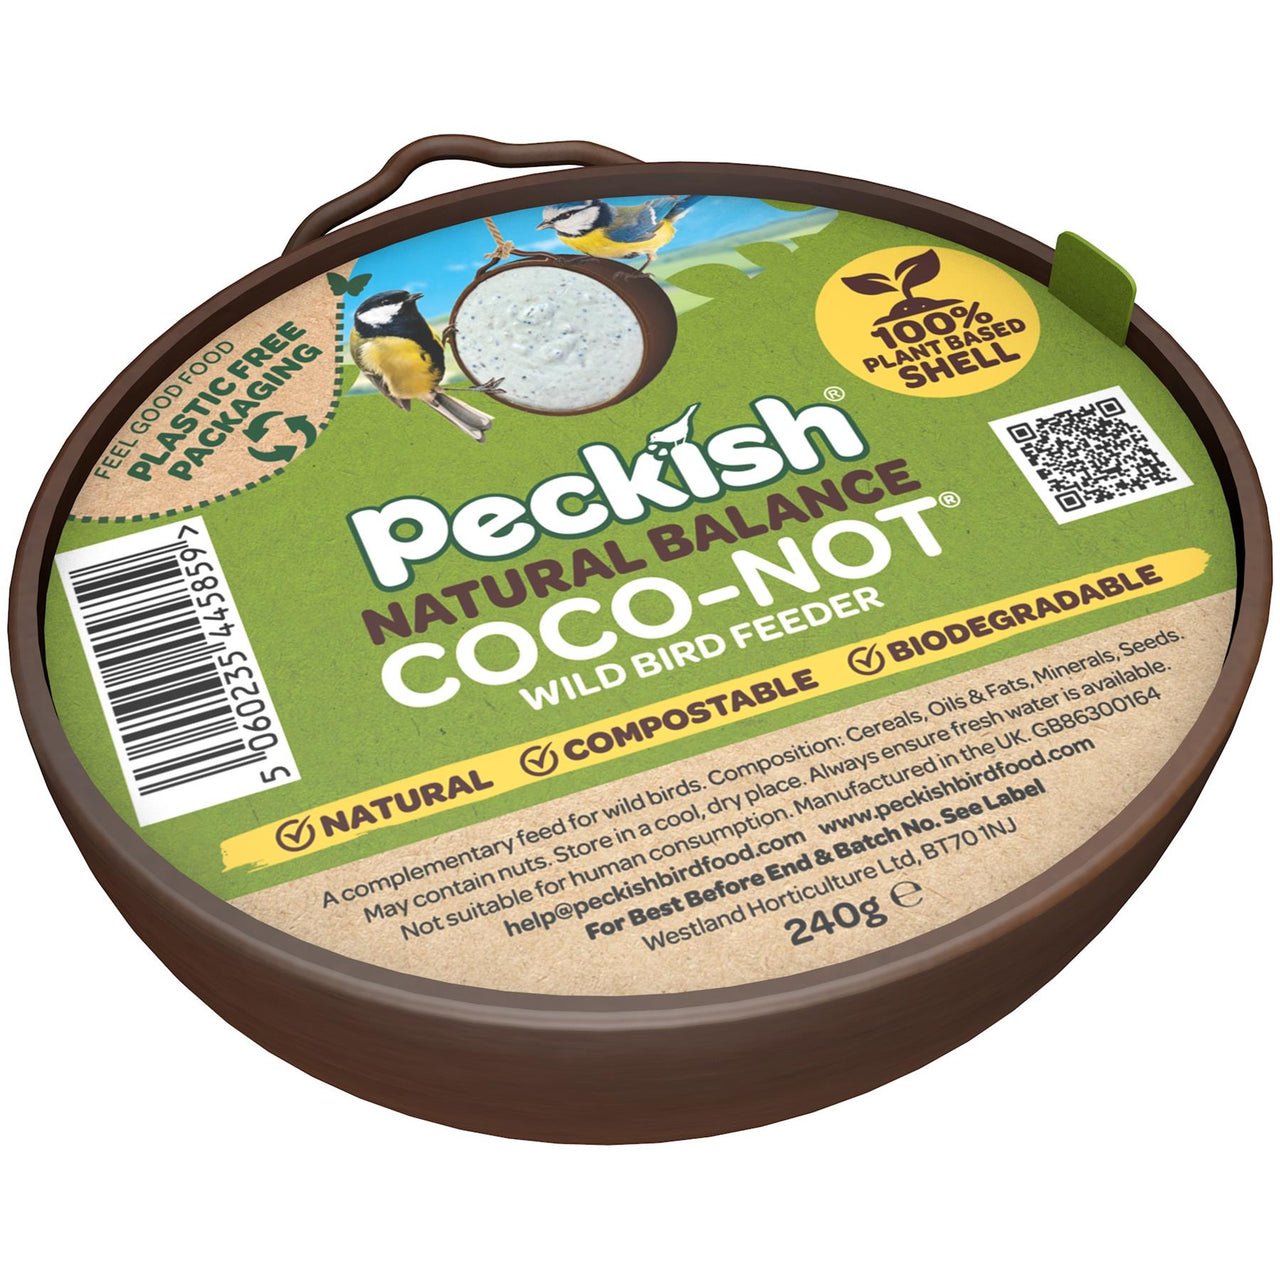 Peckish - Coco-Not Natural Balance Suet Cake